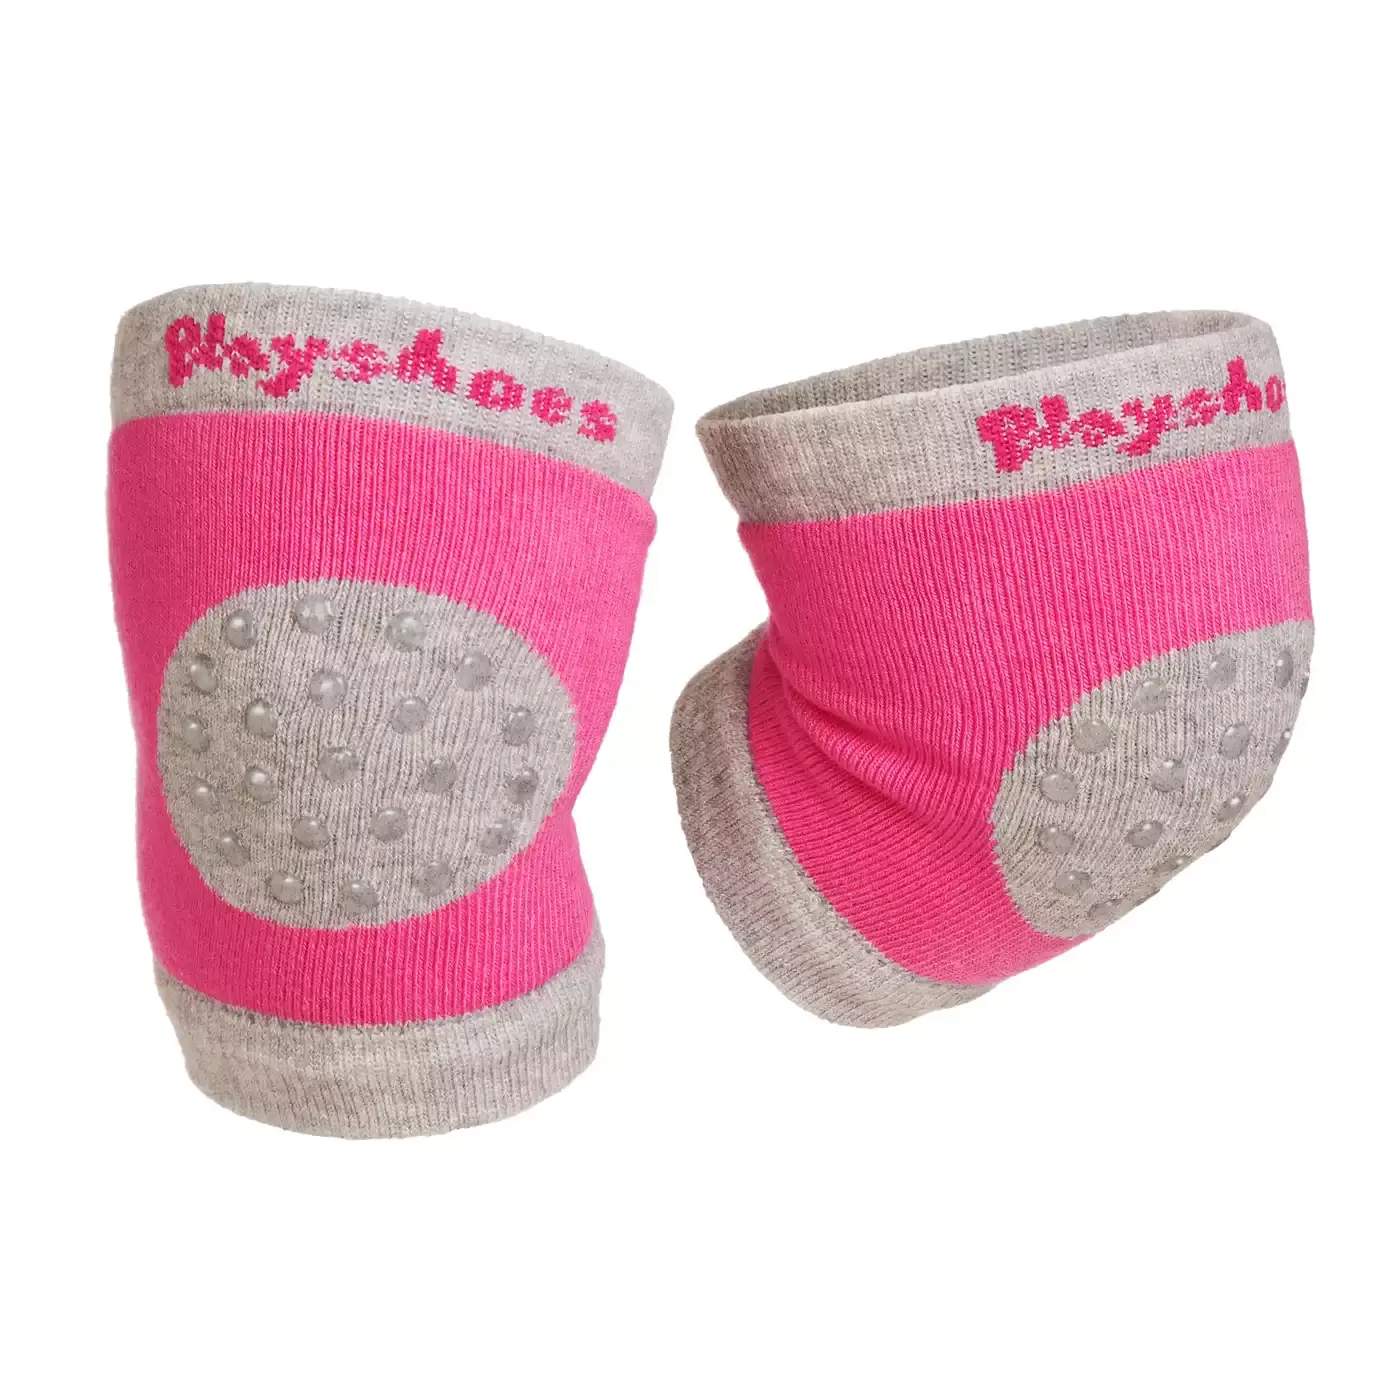 Knieschoner Playshoes Pink Rosa 2019579004003 1